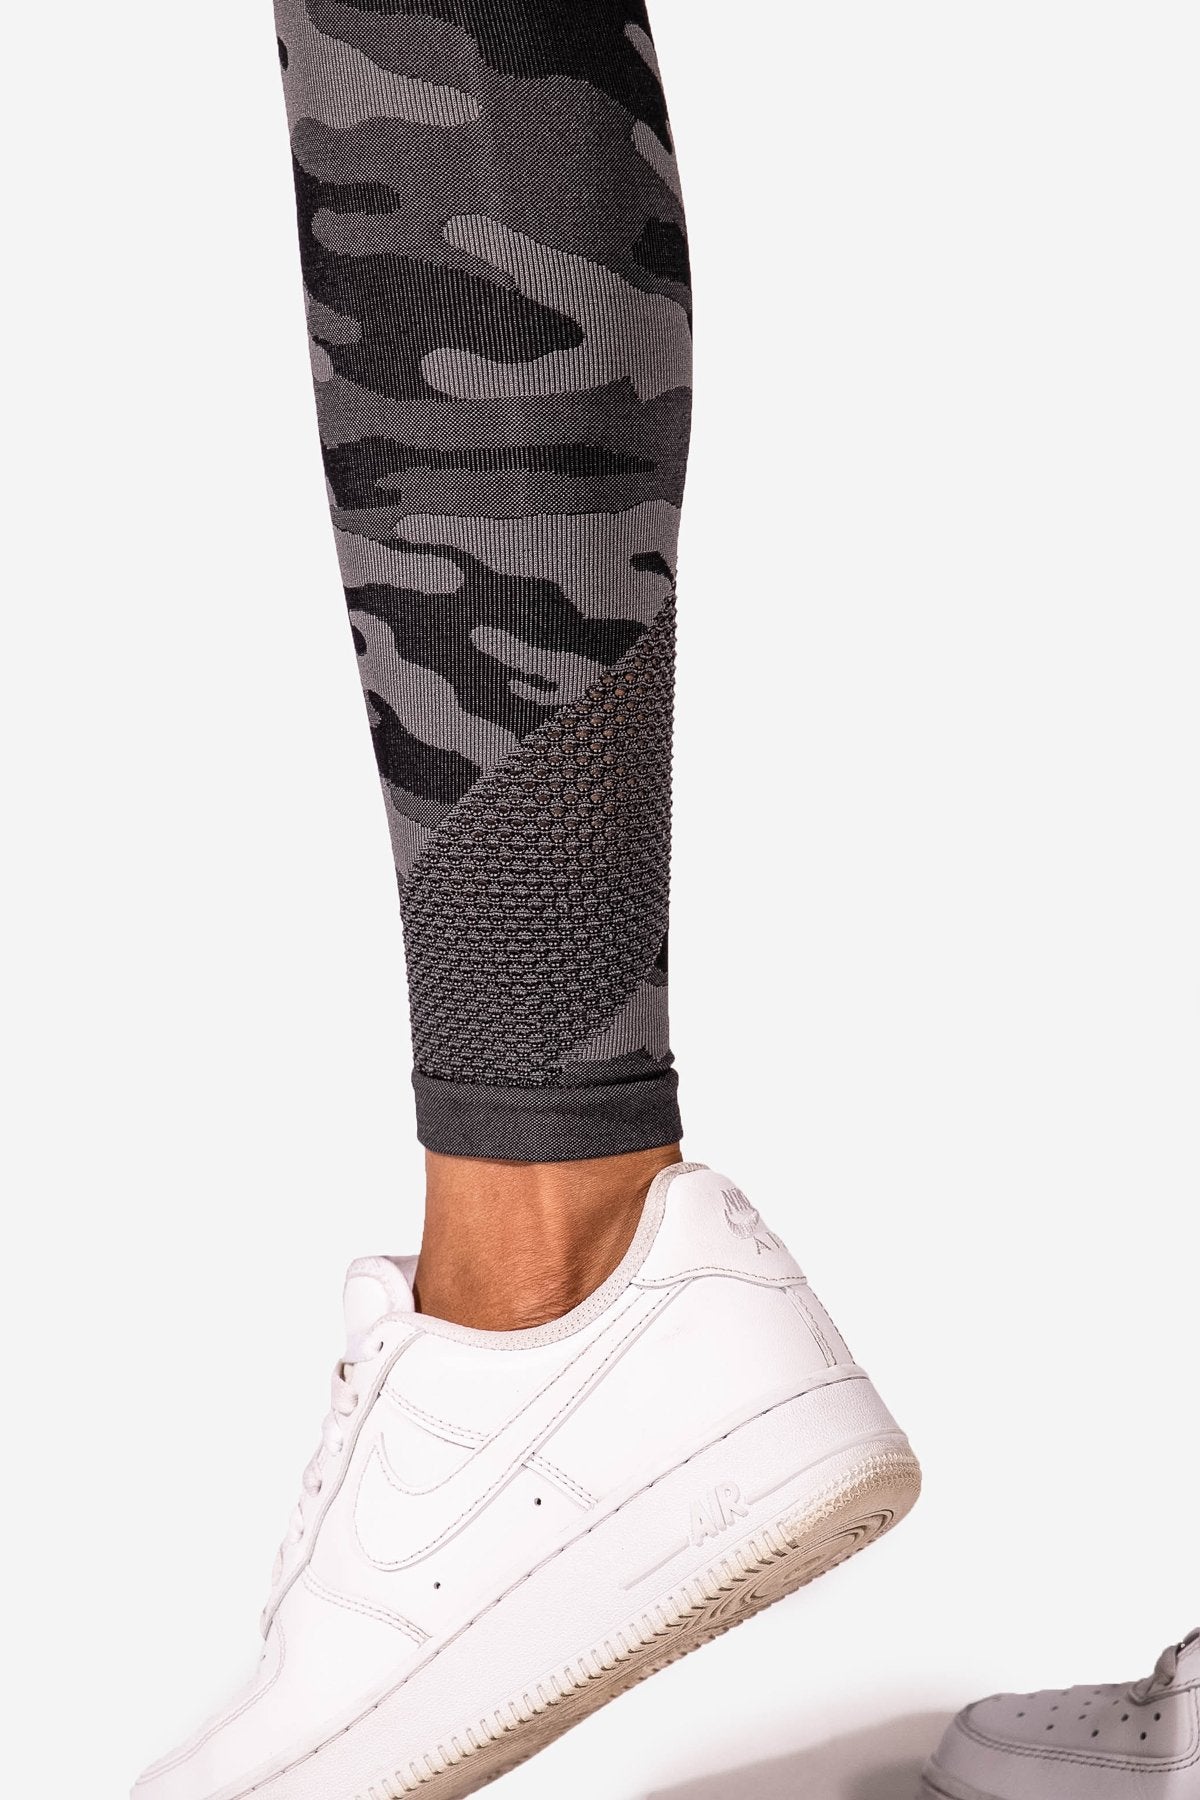 MISS MOLY Womens Seamless High Waisted Gym Leggings Camo Black Stretch Full  Length Yoga Pants 